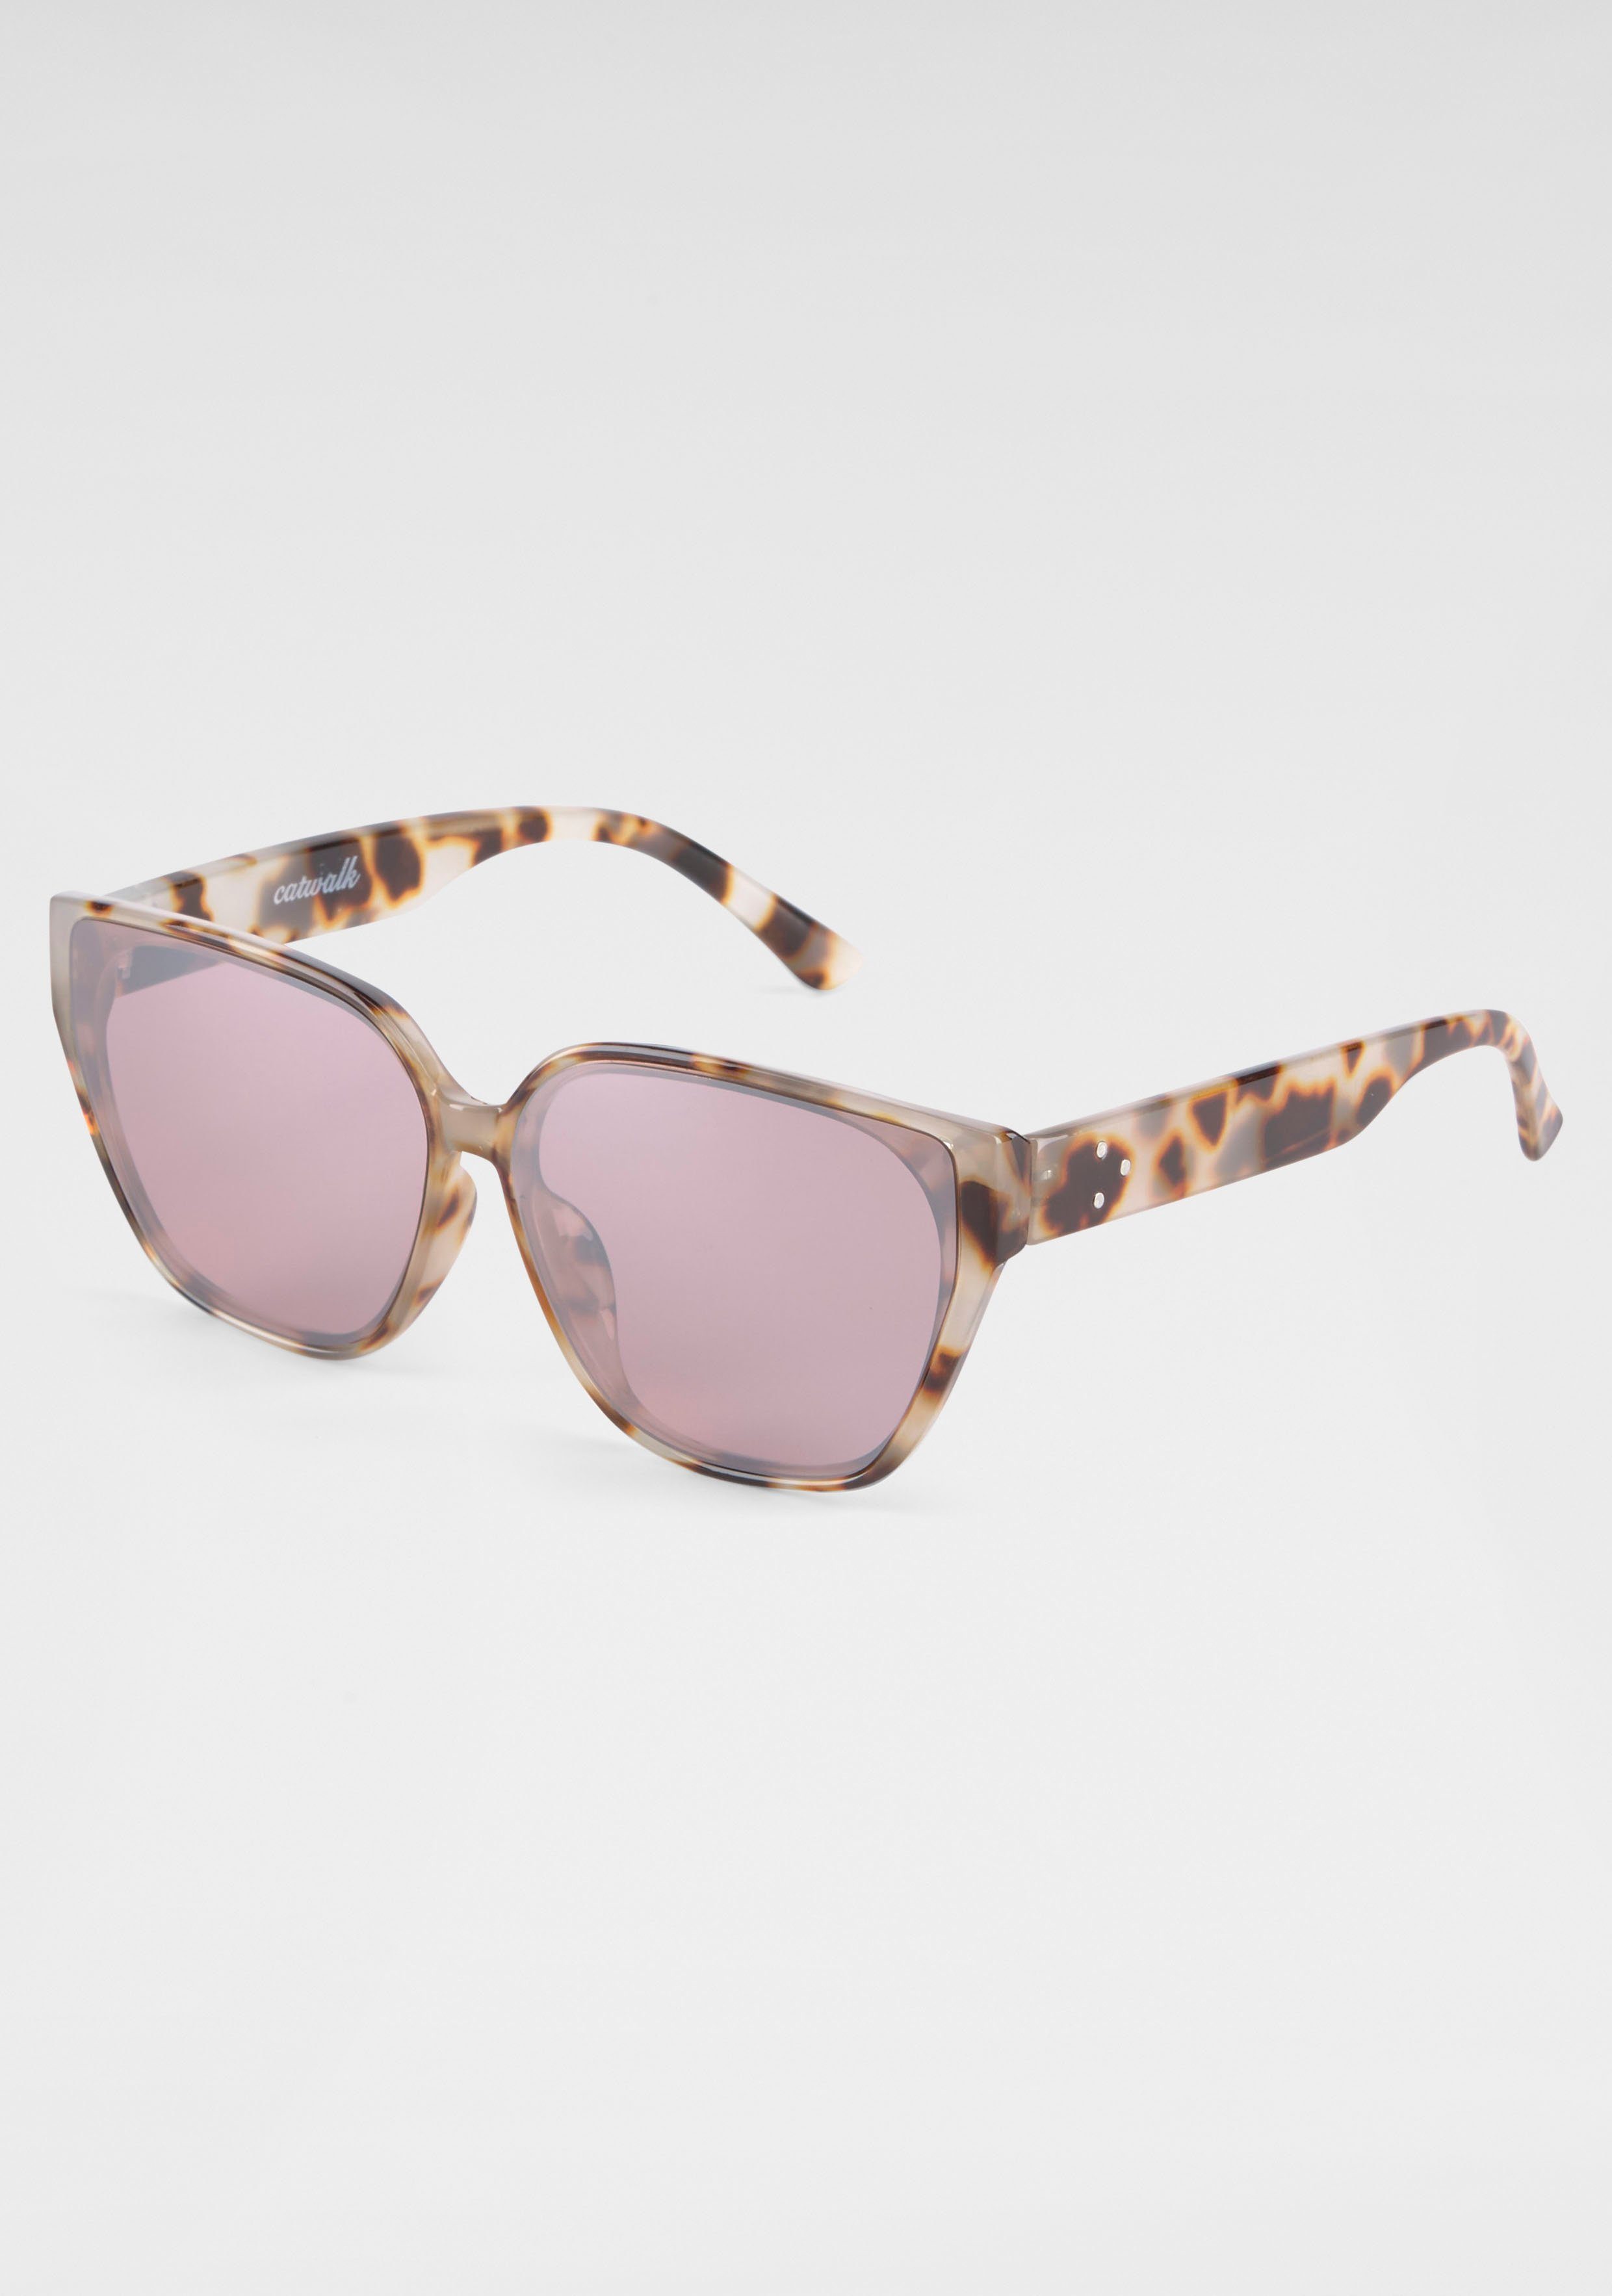 catwalk Eyewear Leo-Optik braun-natur Sonnenbrille